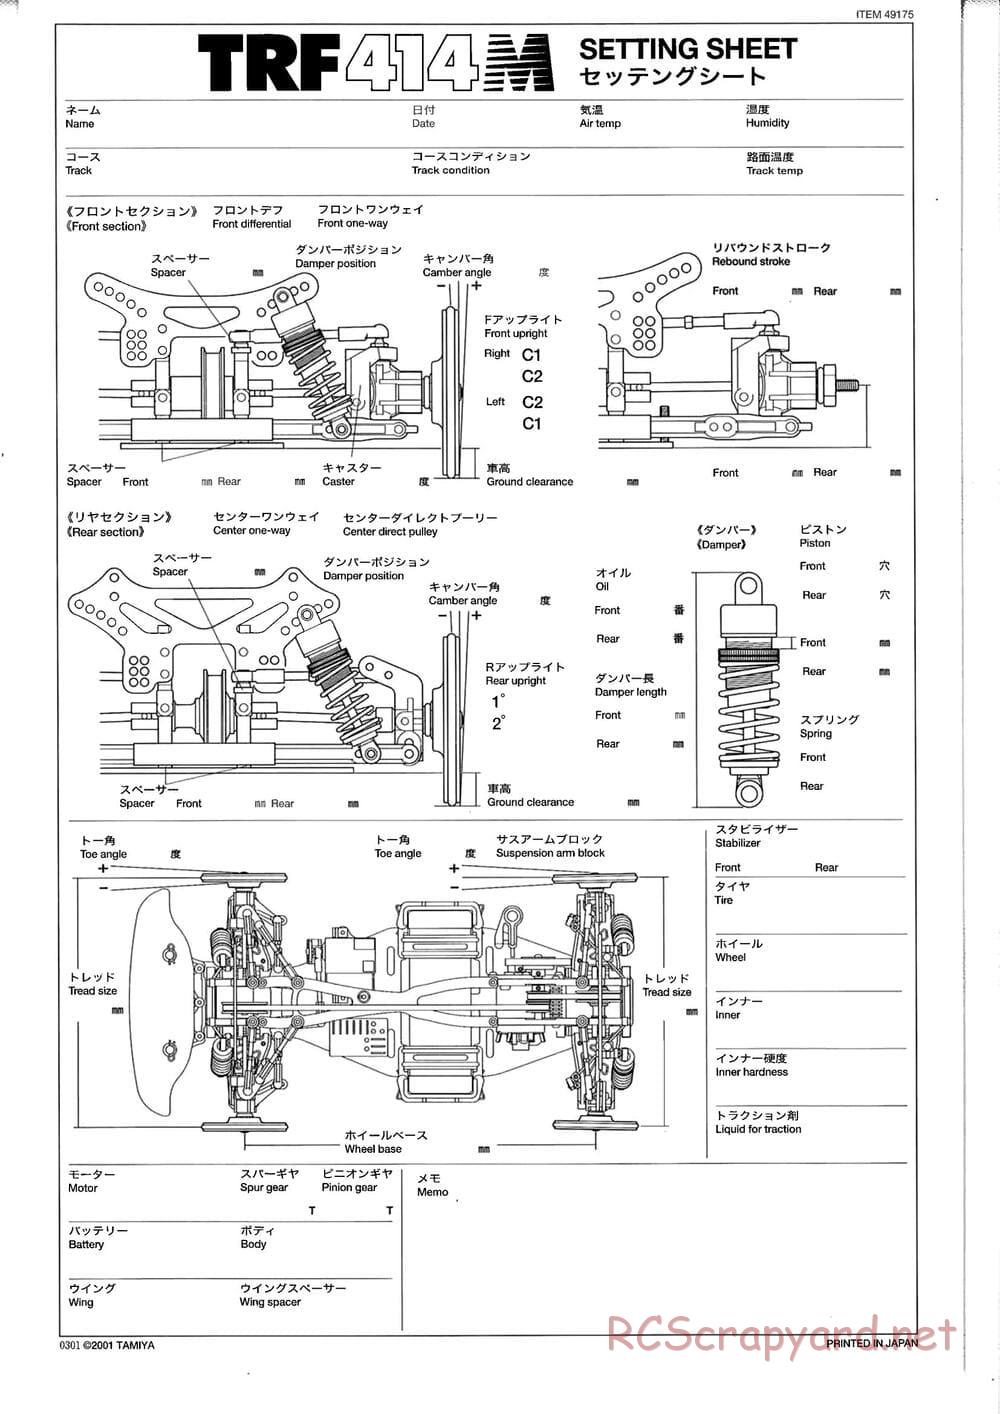 Tamiya - TRF414M Chassis - Manual - Page 29